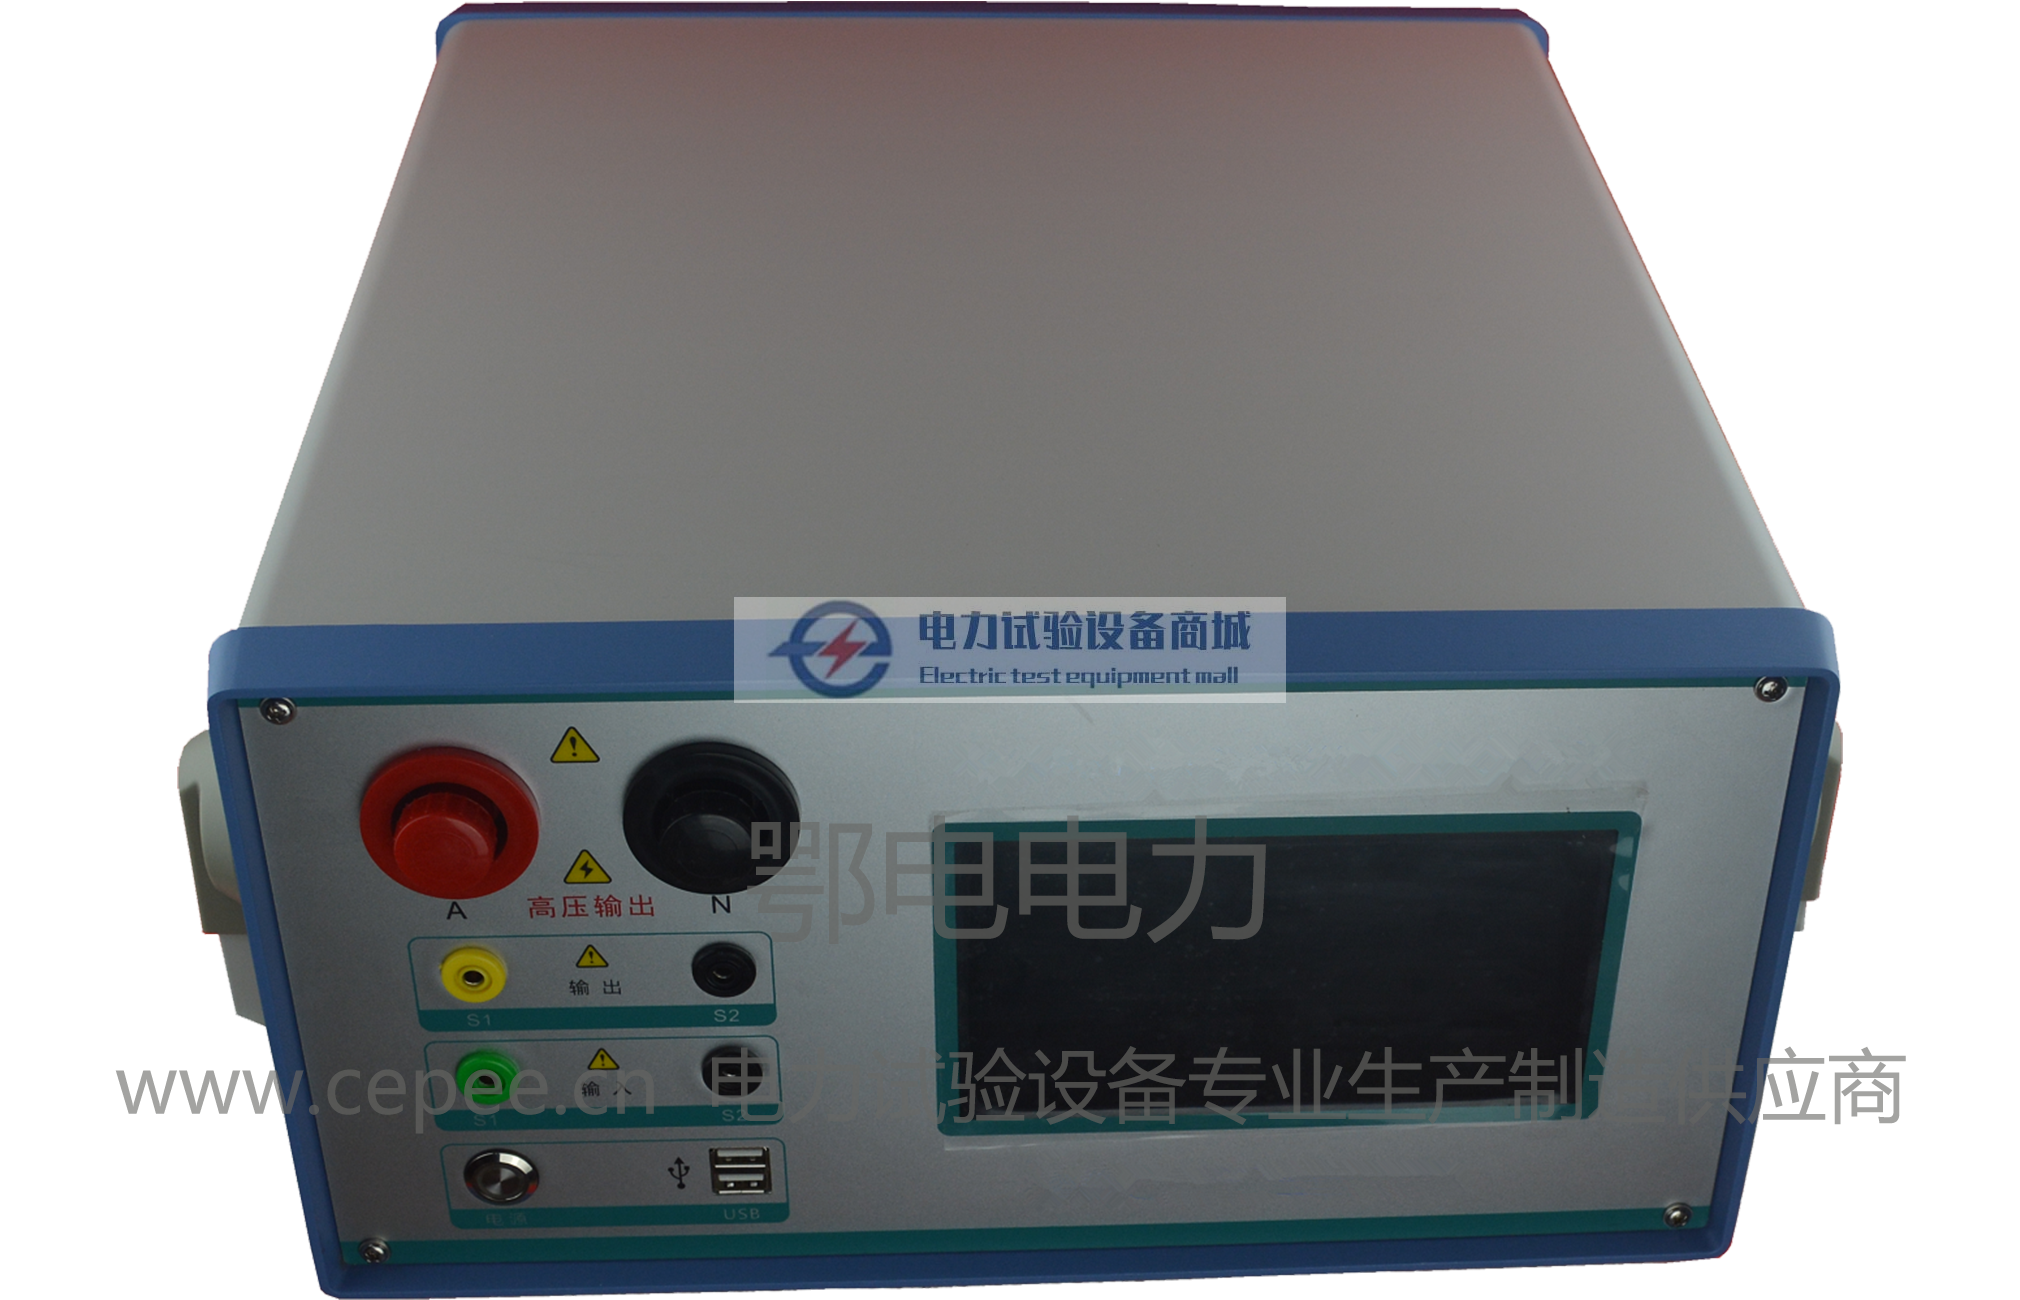 EDPT-2000C便携式电压互感器分析仪